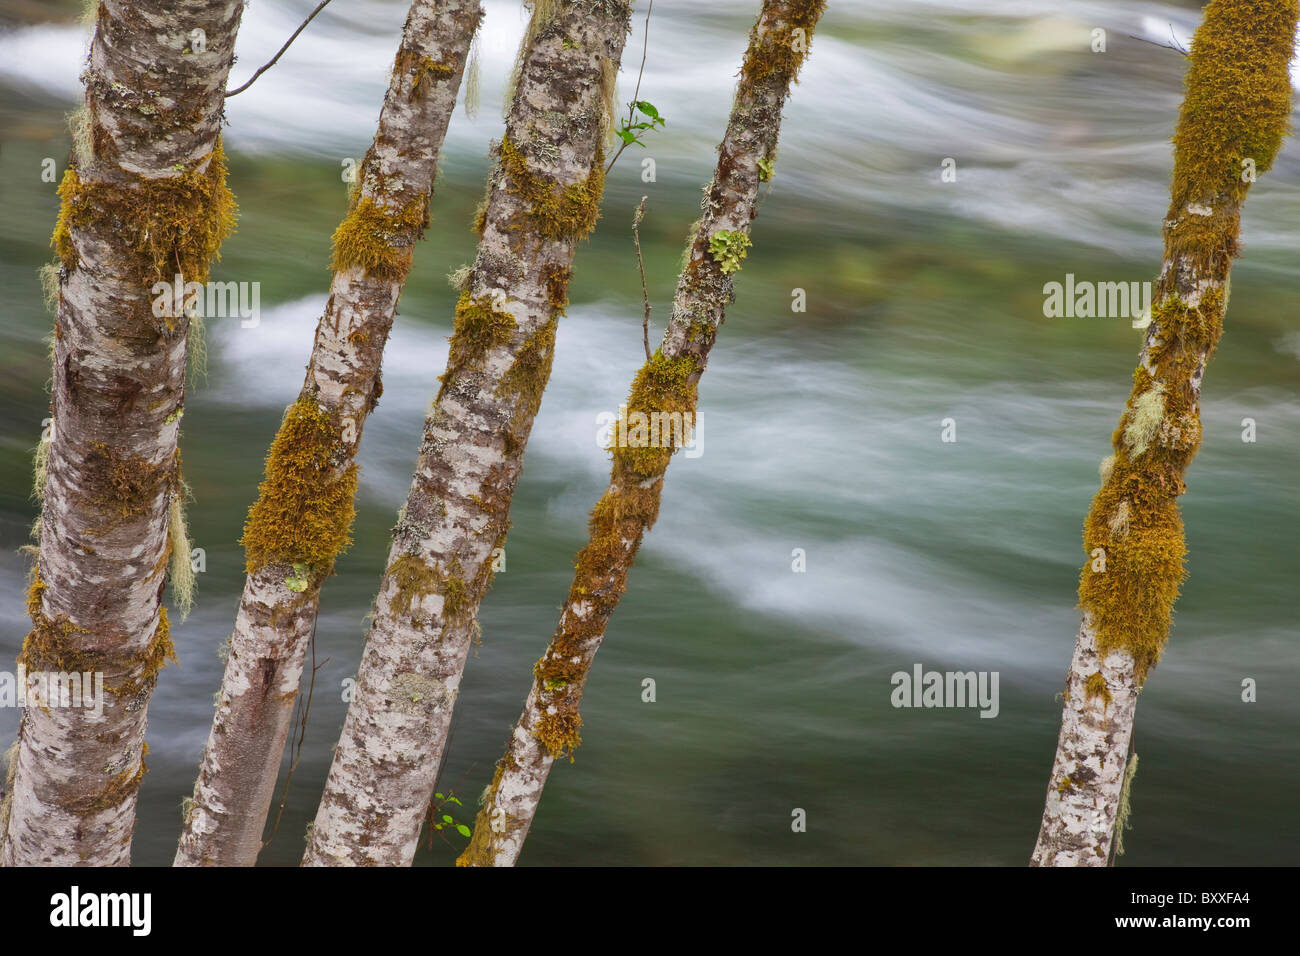 USA; Oregon; Clackamas Fluss und Erle Bäume Fotografie Stockfoto